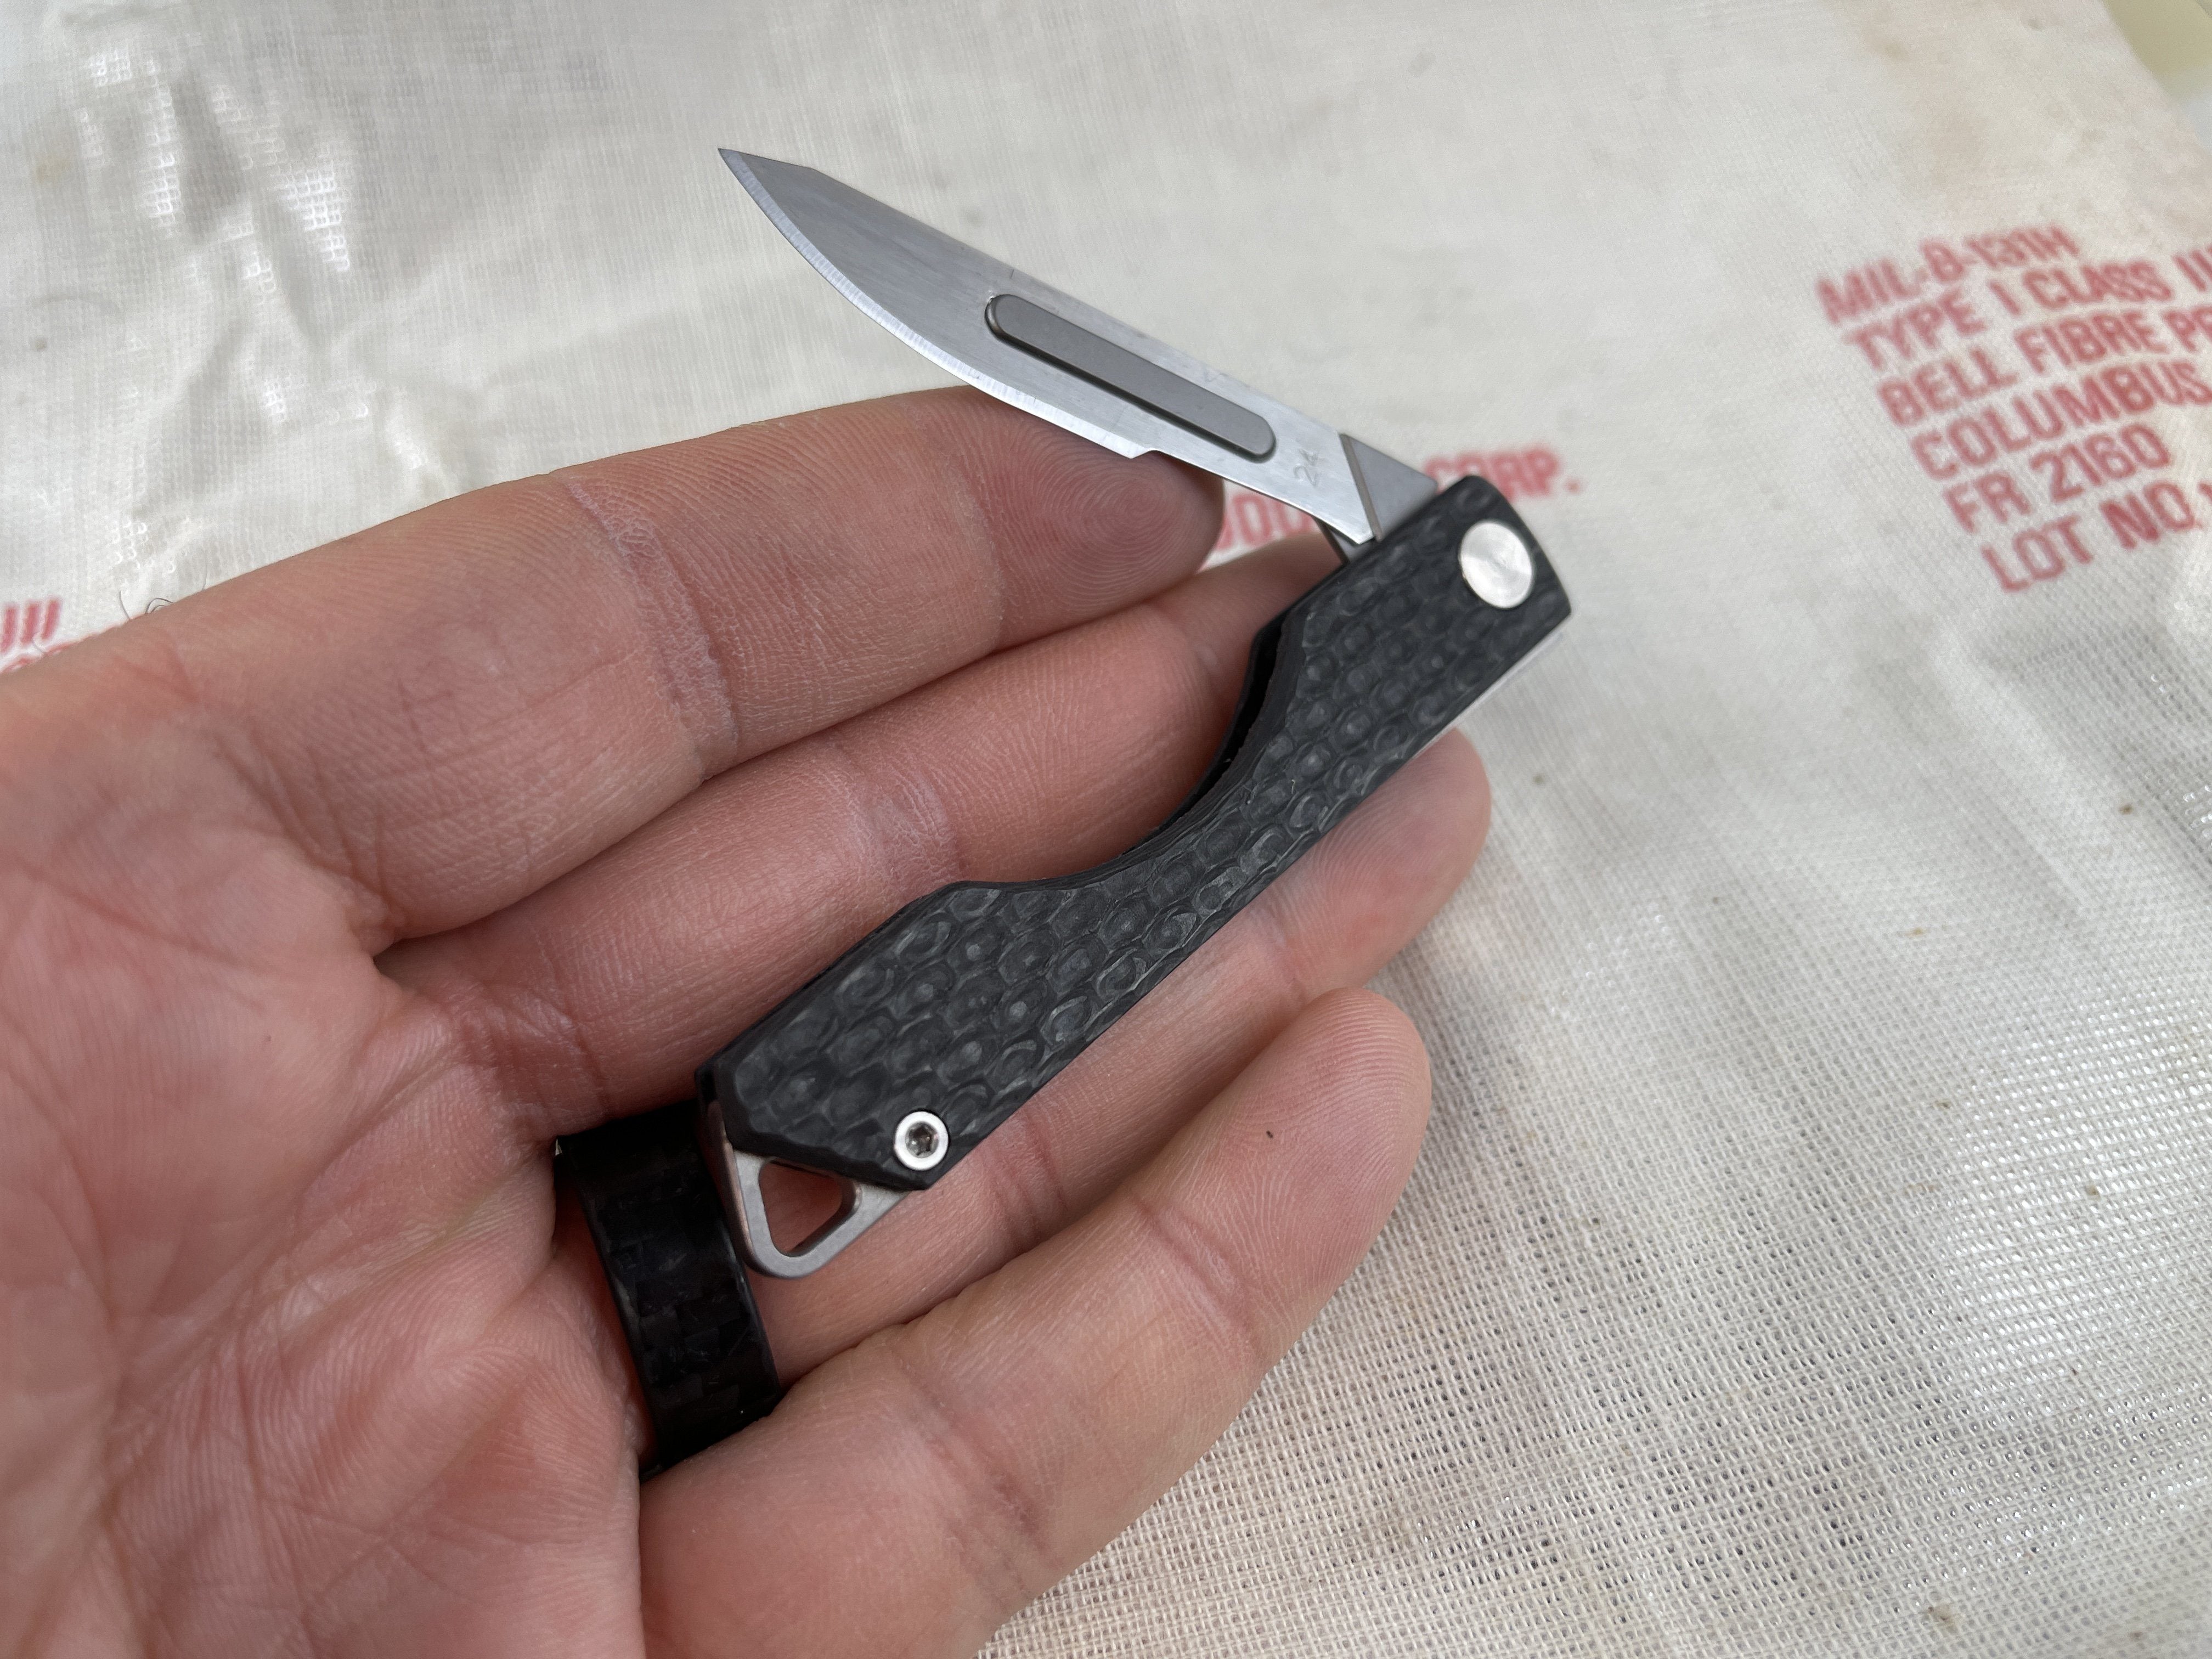 VIFUNCO Folding Scalpel Knife, Pocket Knife for Men, Small